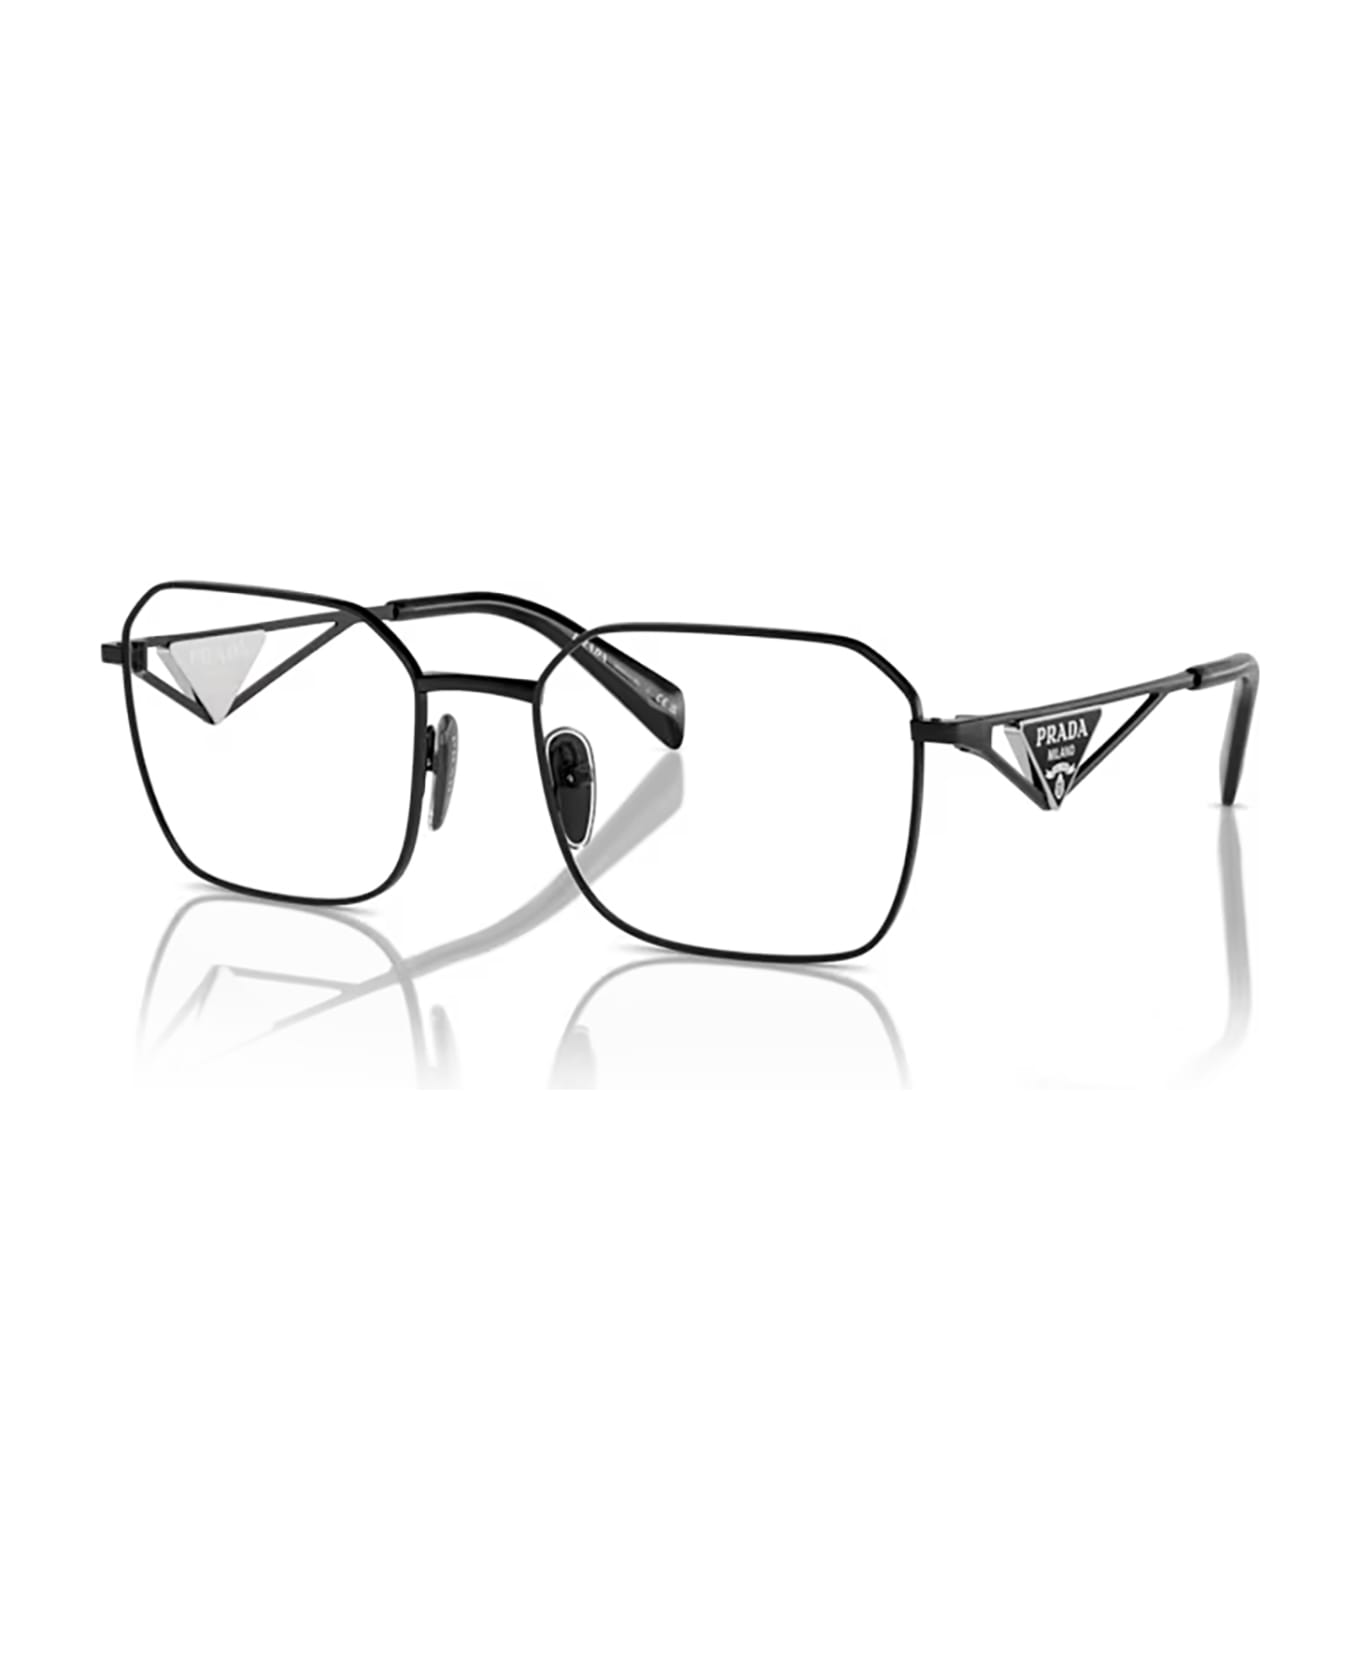 Prada Eyewear Pr A51v Black Glasses - Black